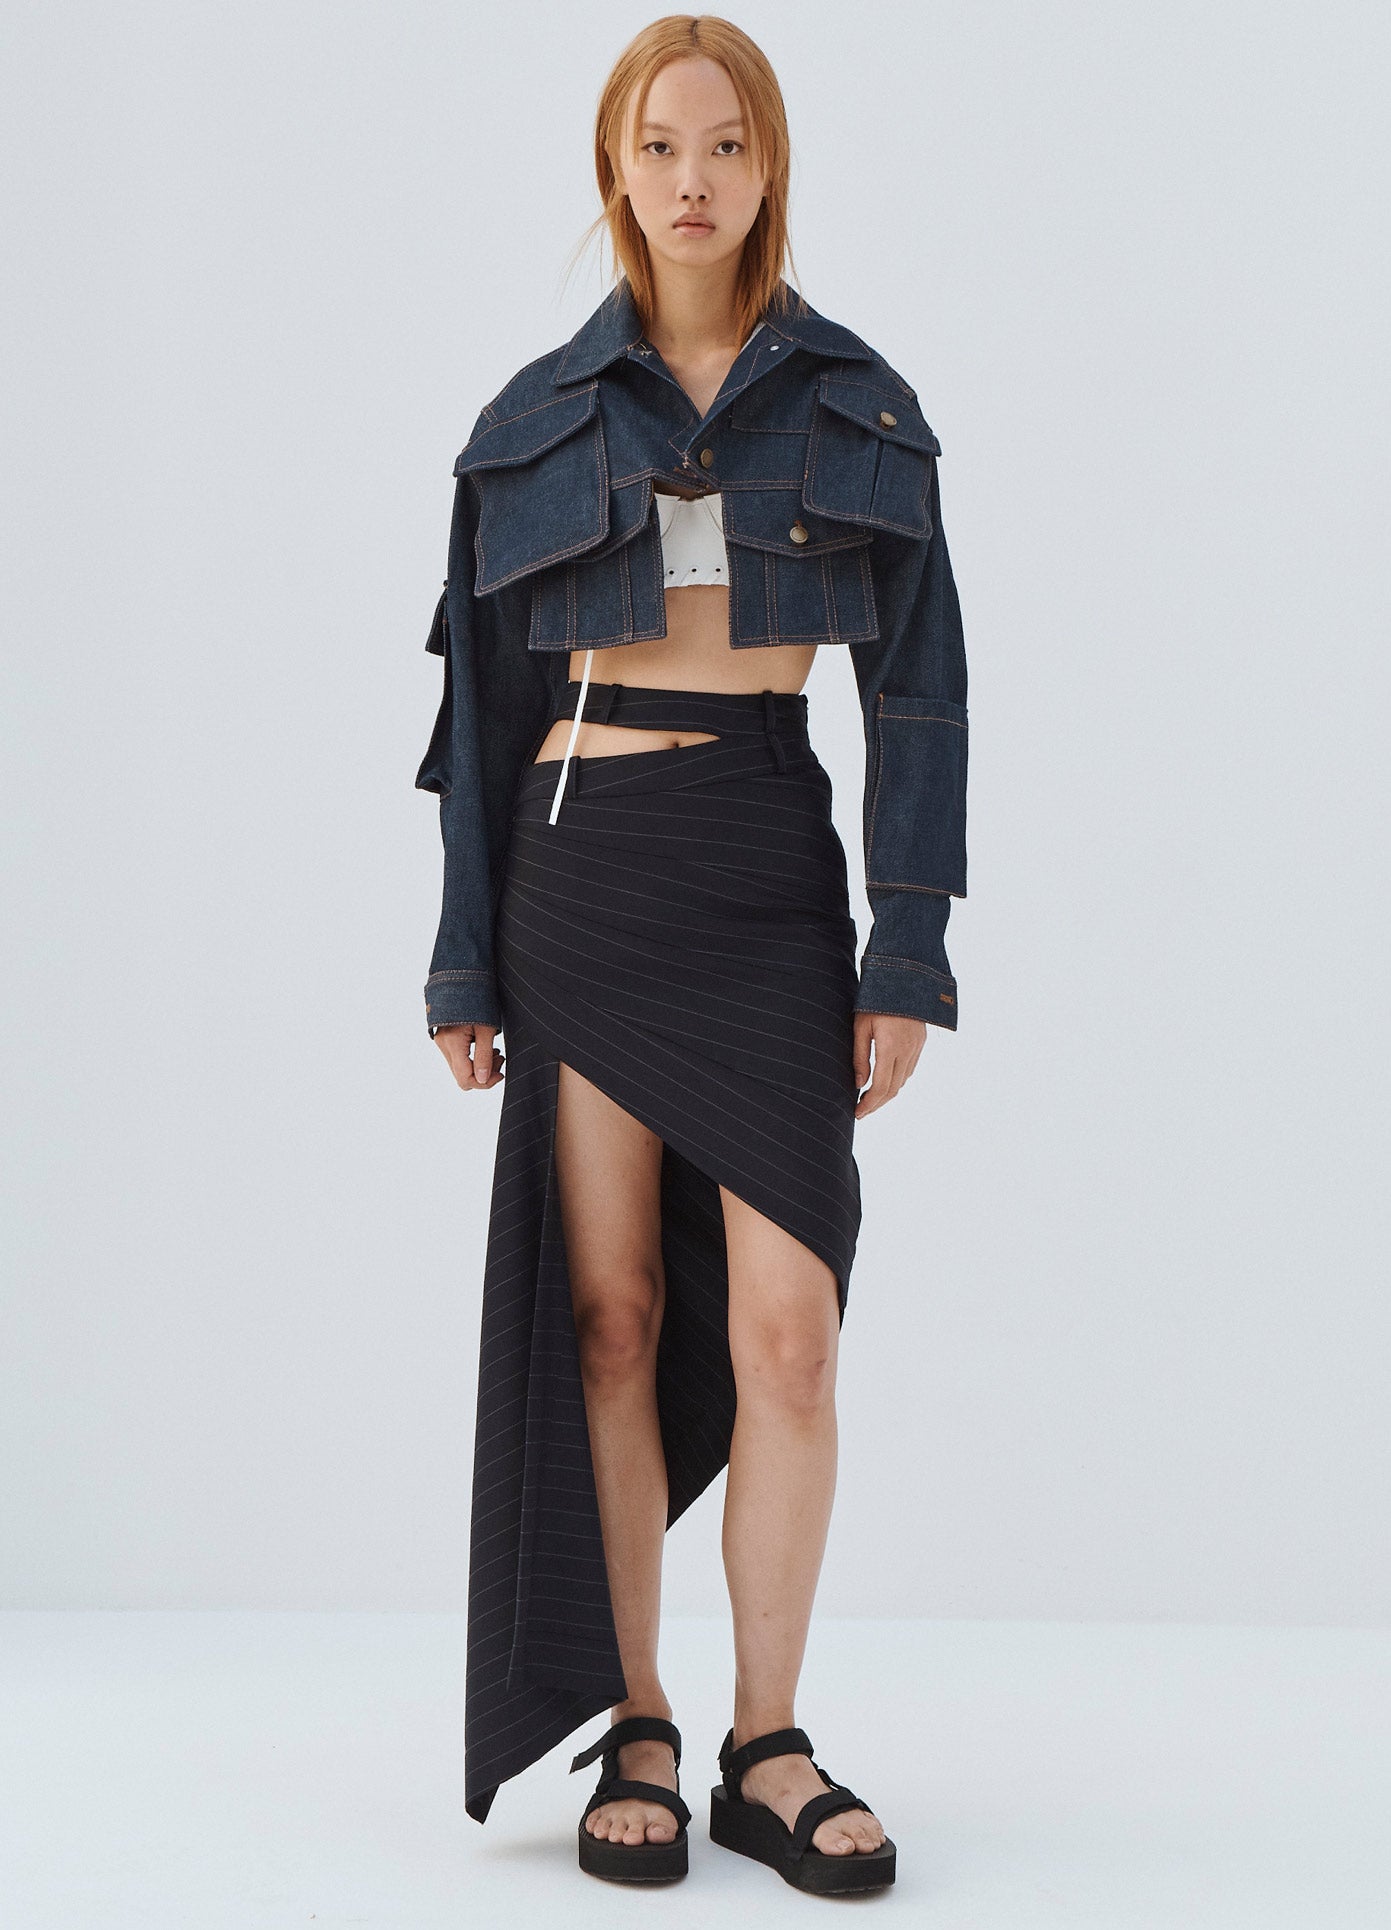 MONSE Double Waistband Asymmetrical Skirt in Midnight on Model Wearing Denim Jacket Full Front View